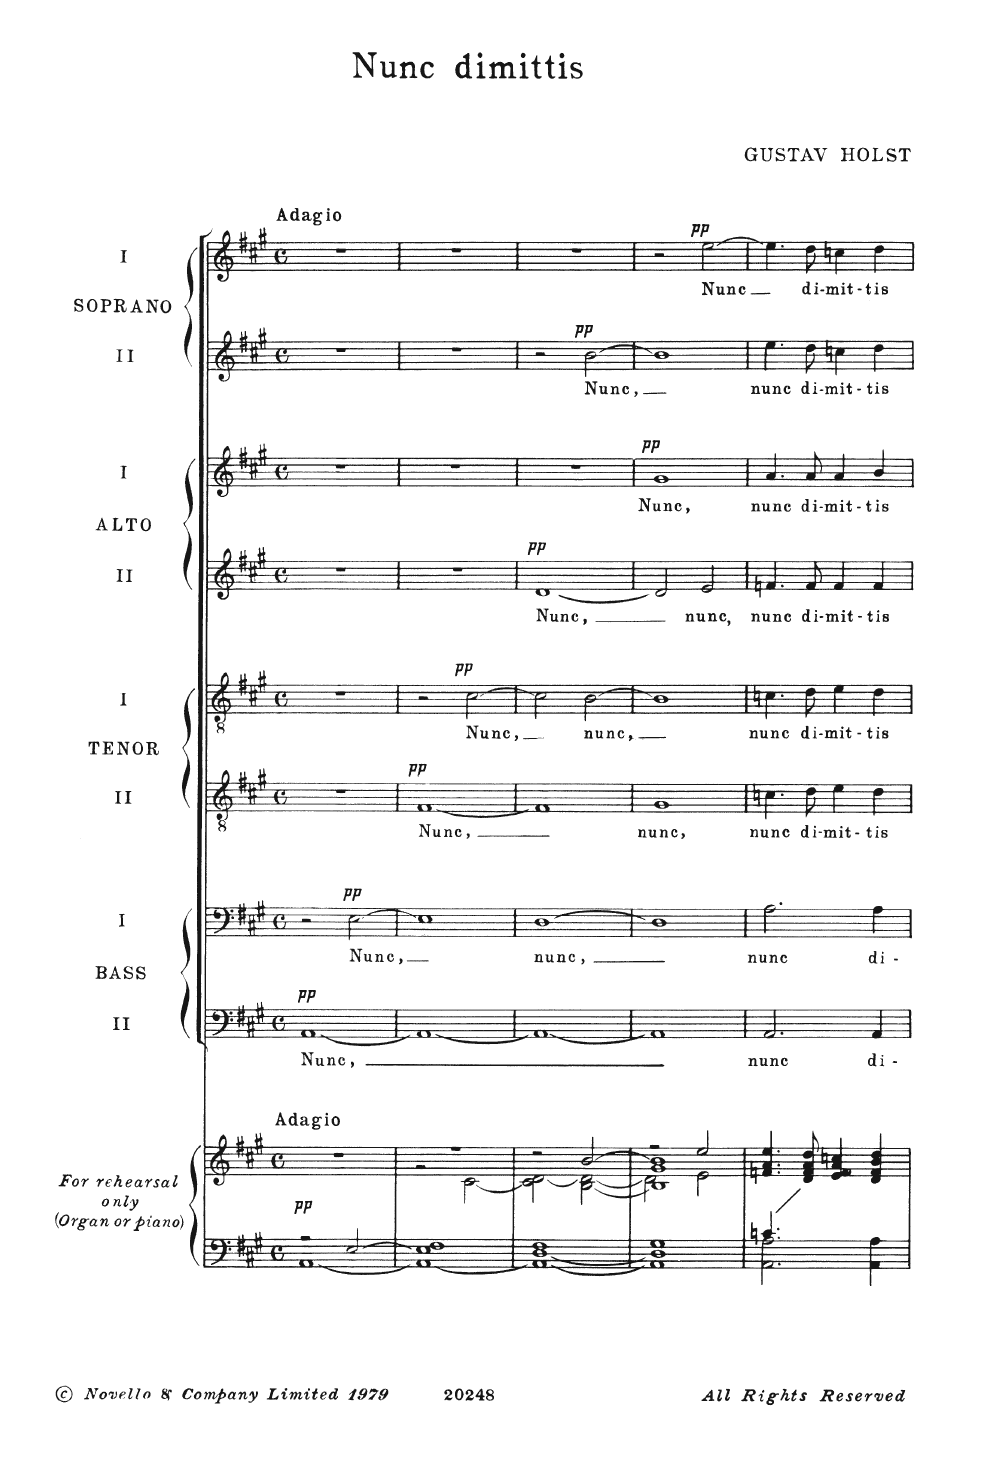 Download Gustav Holst Nunc Dimittis Sheet Music